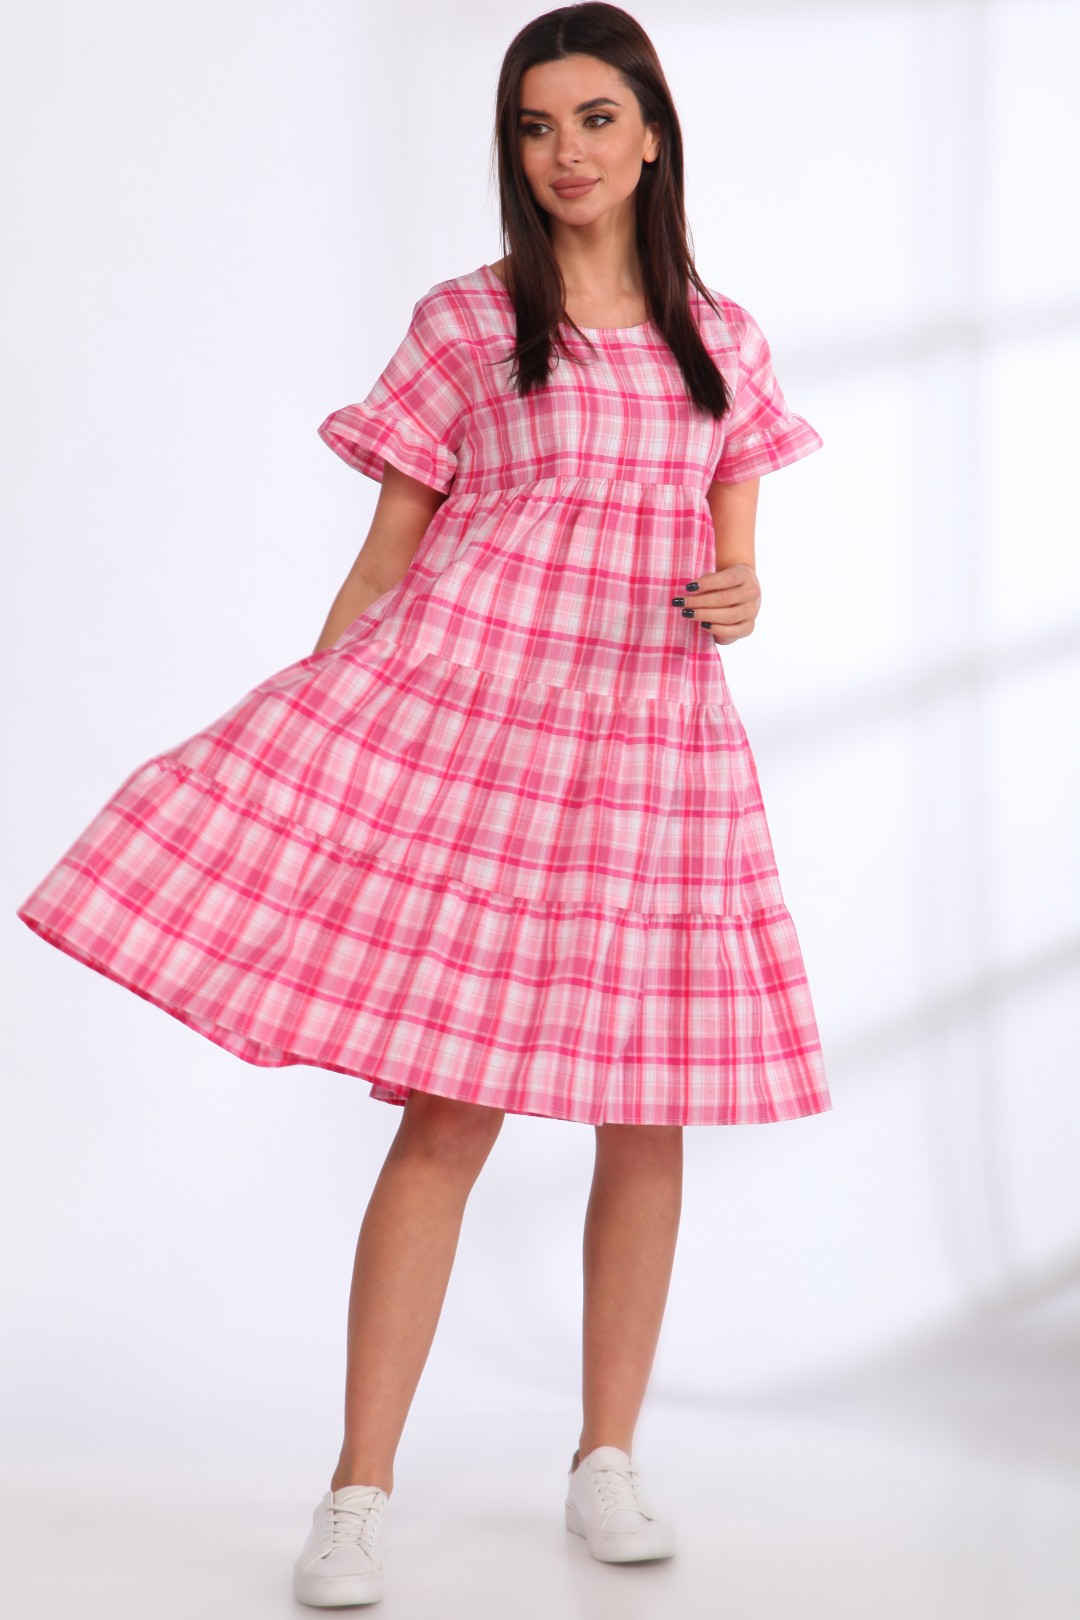 Платье Angelina & Company 537р розовая клетка